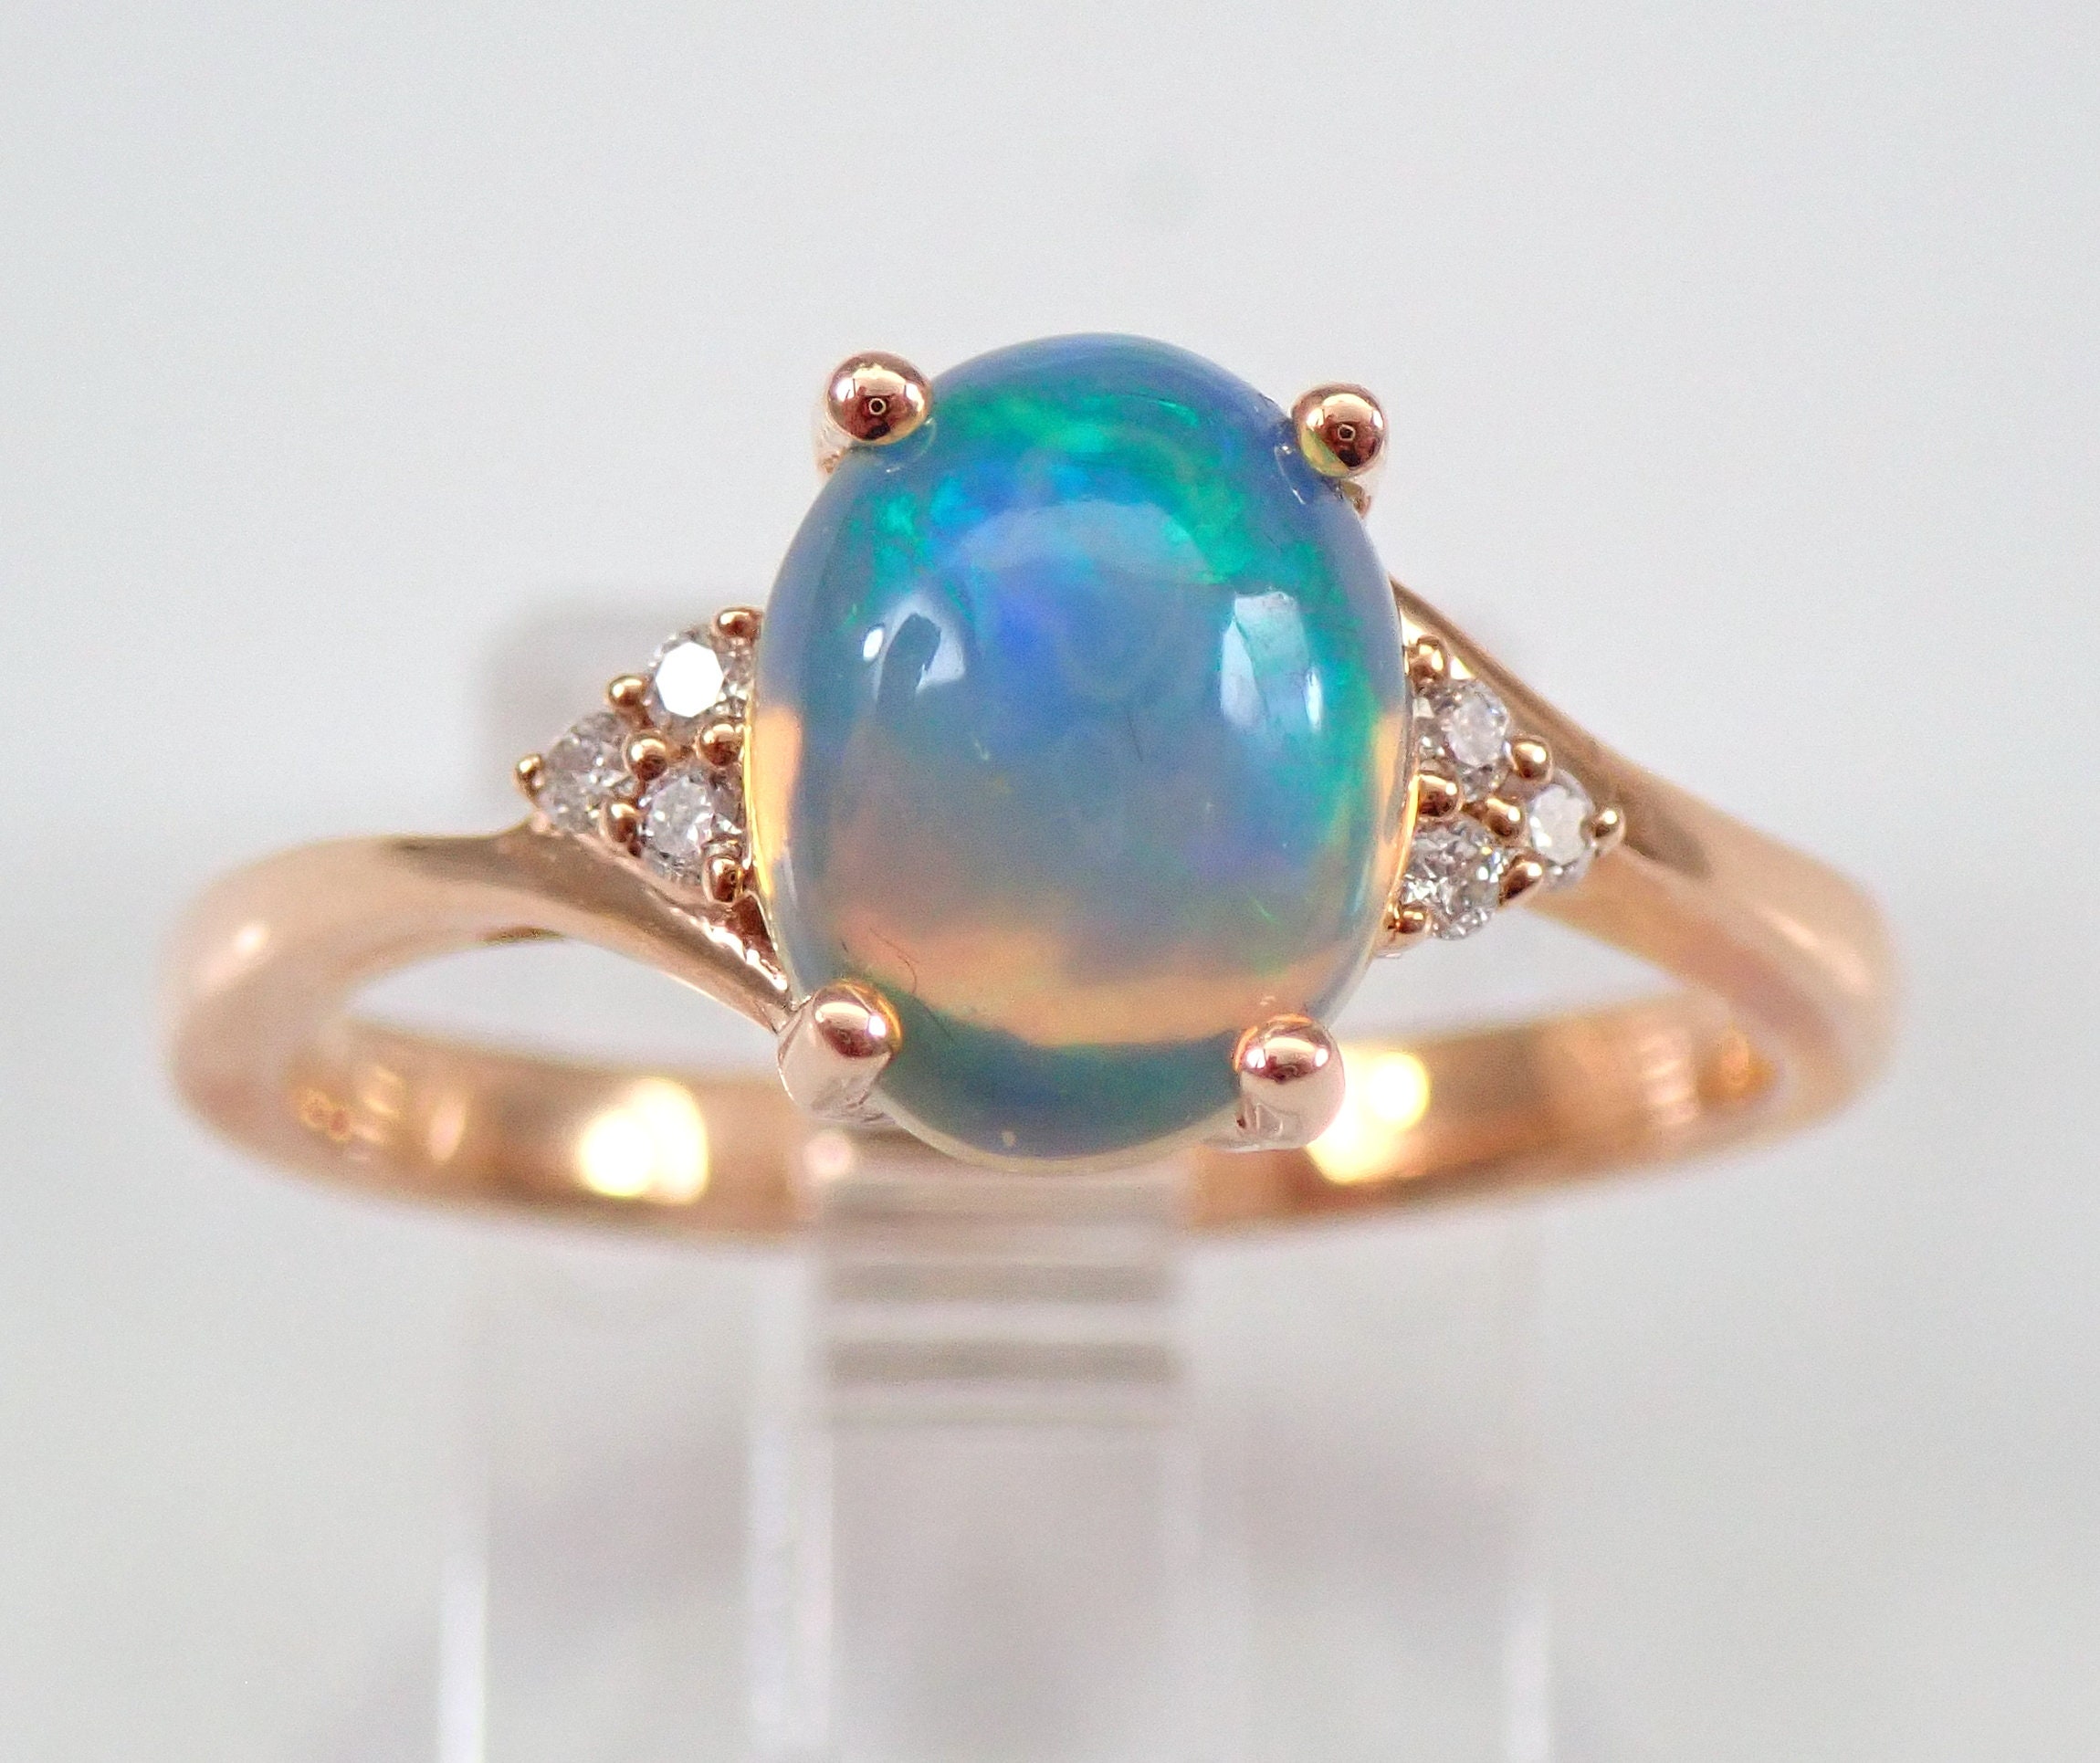 Simple Diamond Wedding Rings to Make Your Big Day Special – Nehita Jewelry